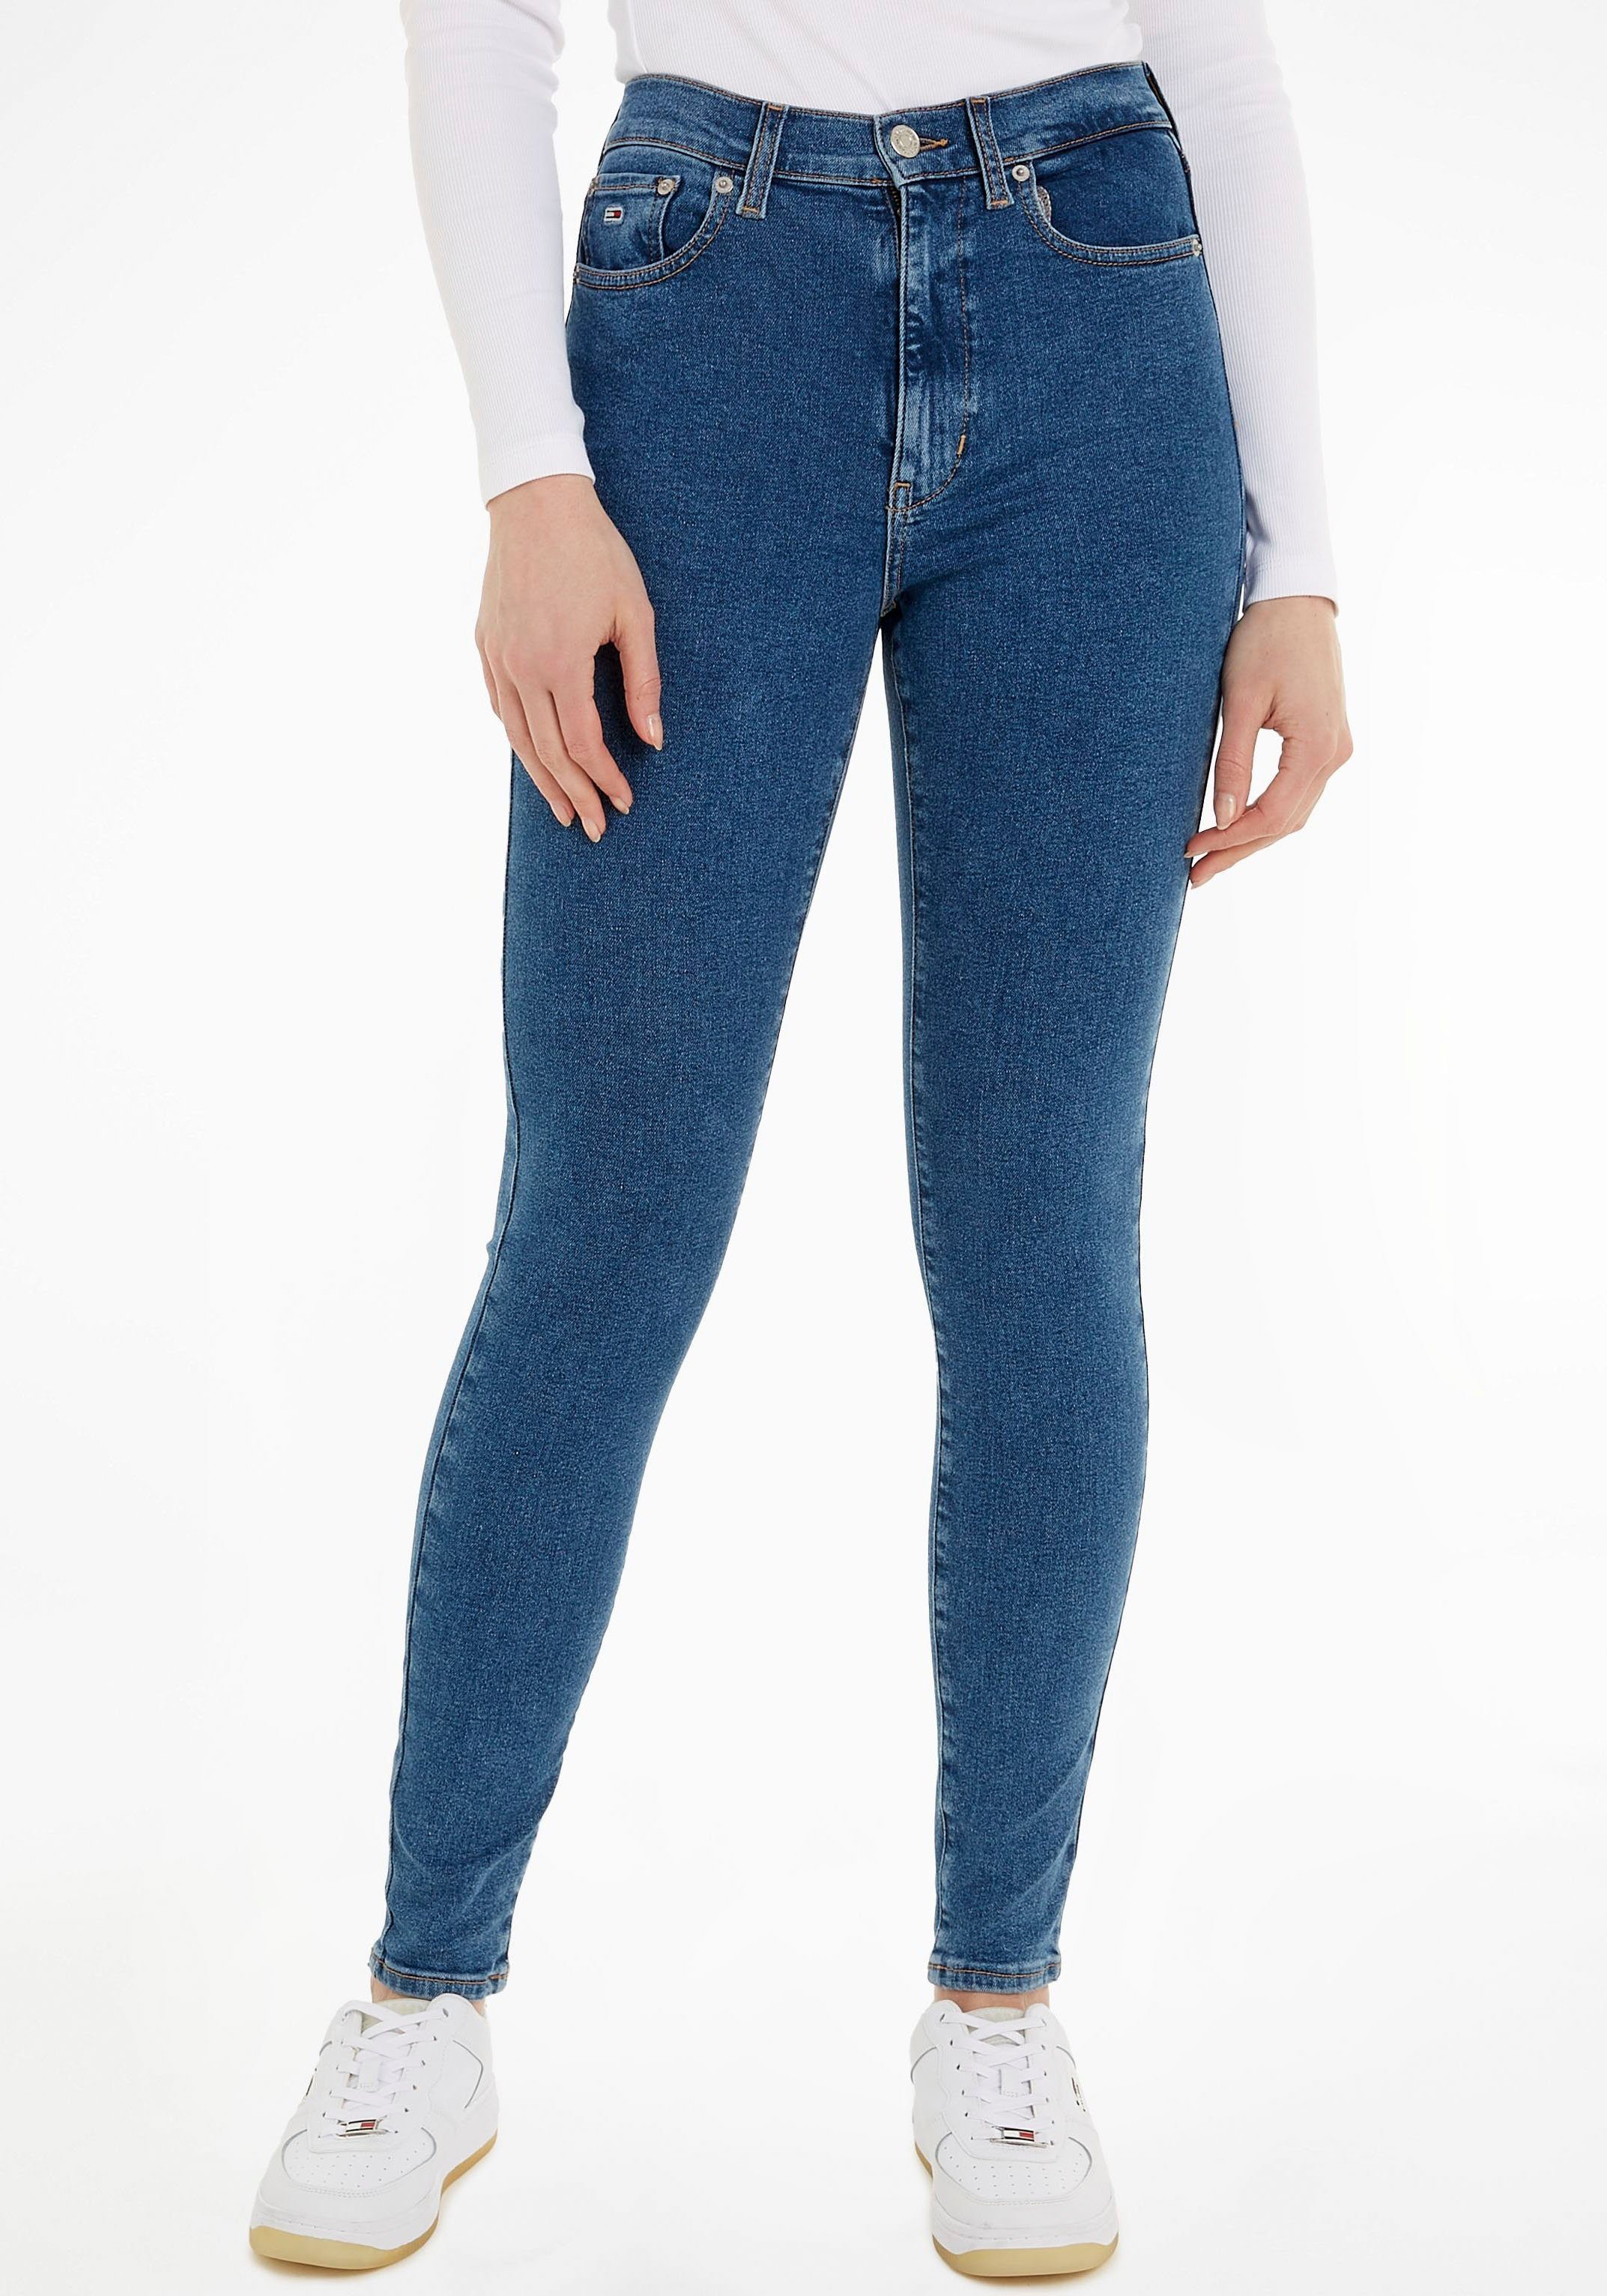 Tommy Jeans high waist skinny jeans SYLVIA medium blue denim